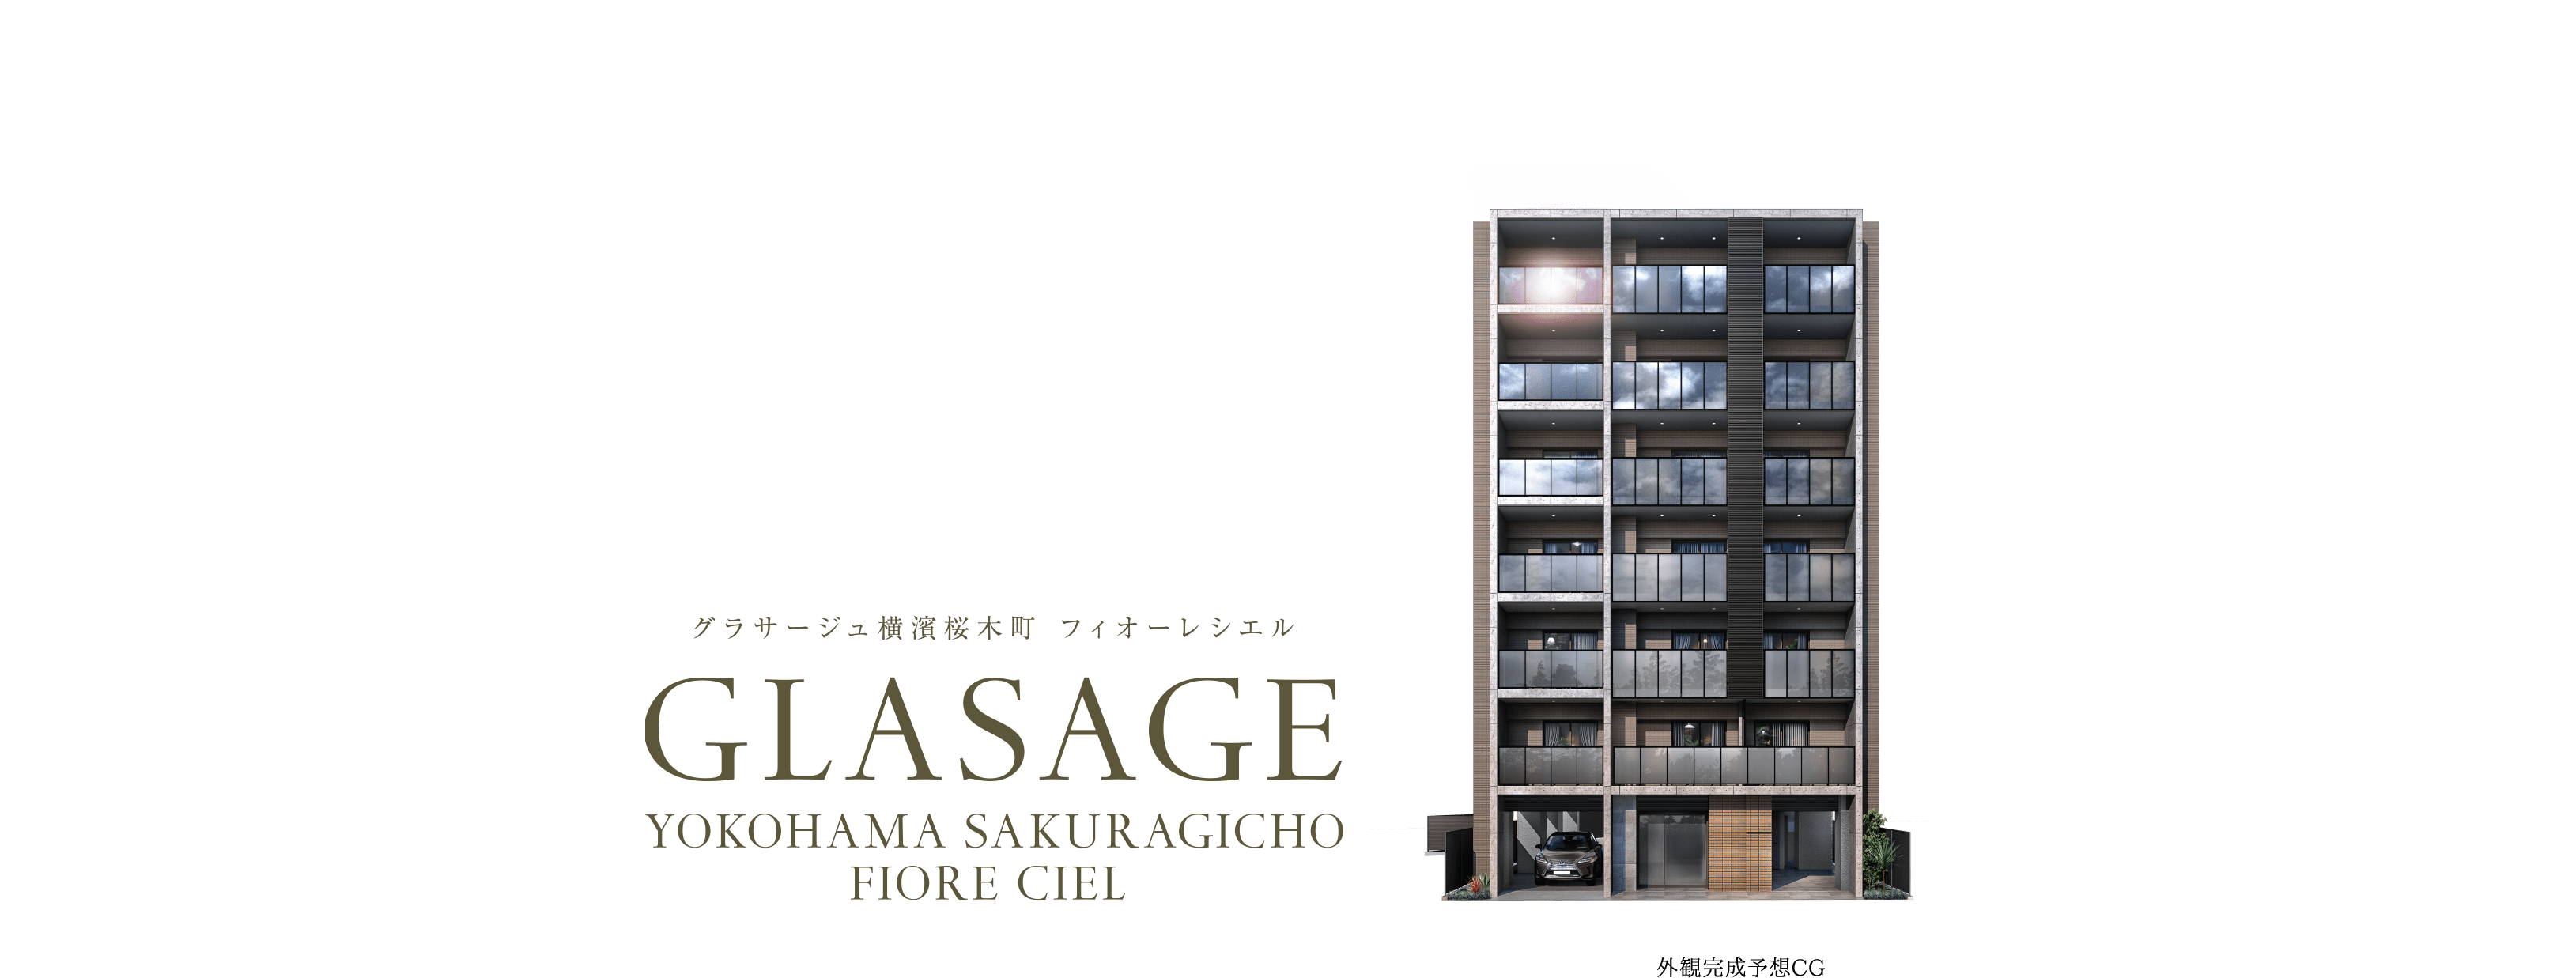 Glasage Building